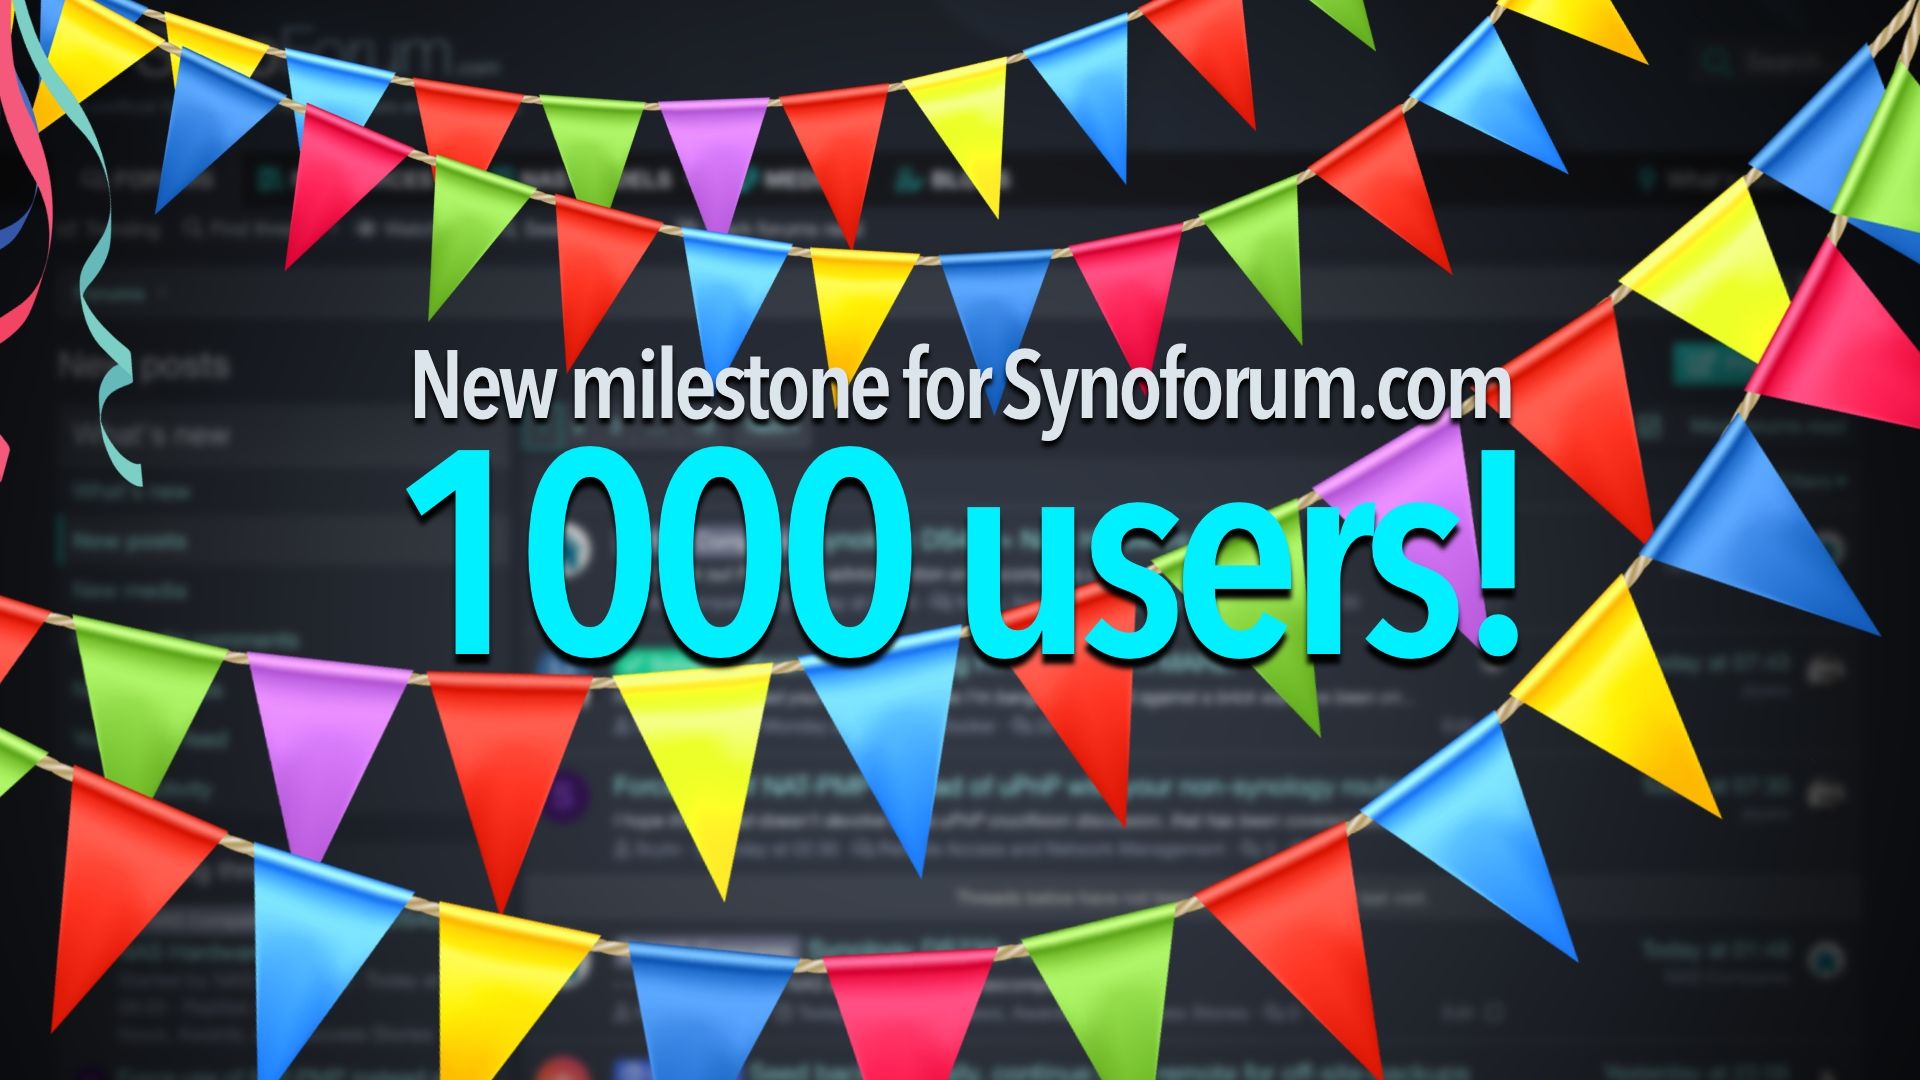 New Synoforum milestone, 1000 users!